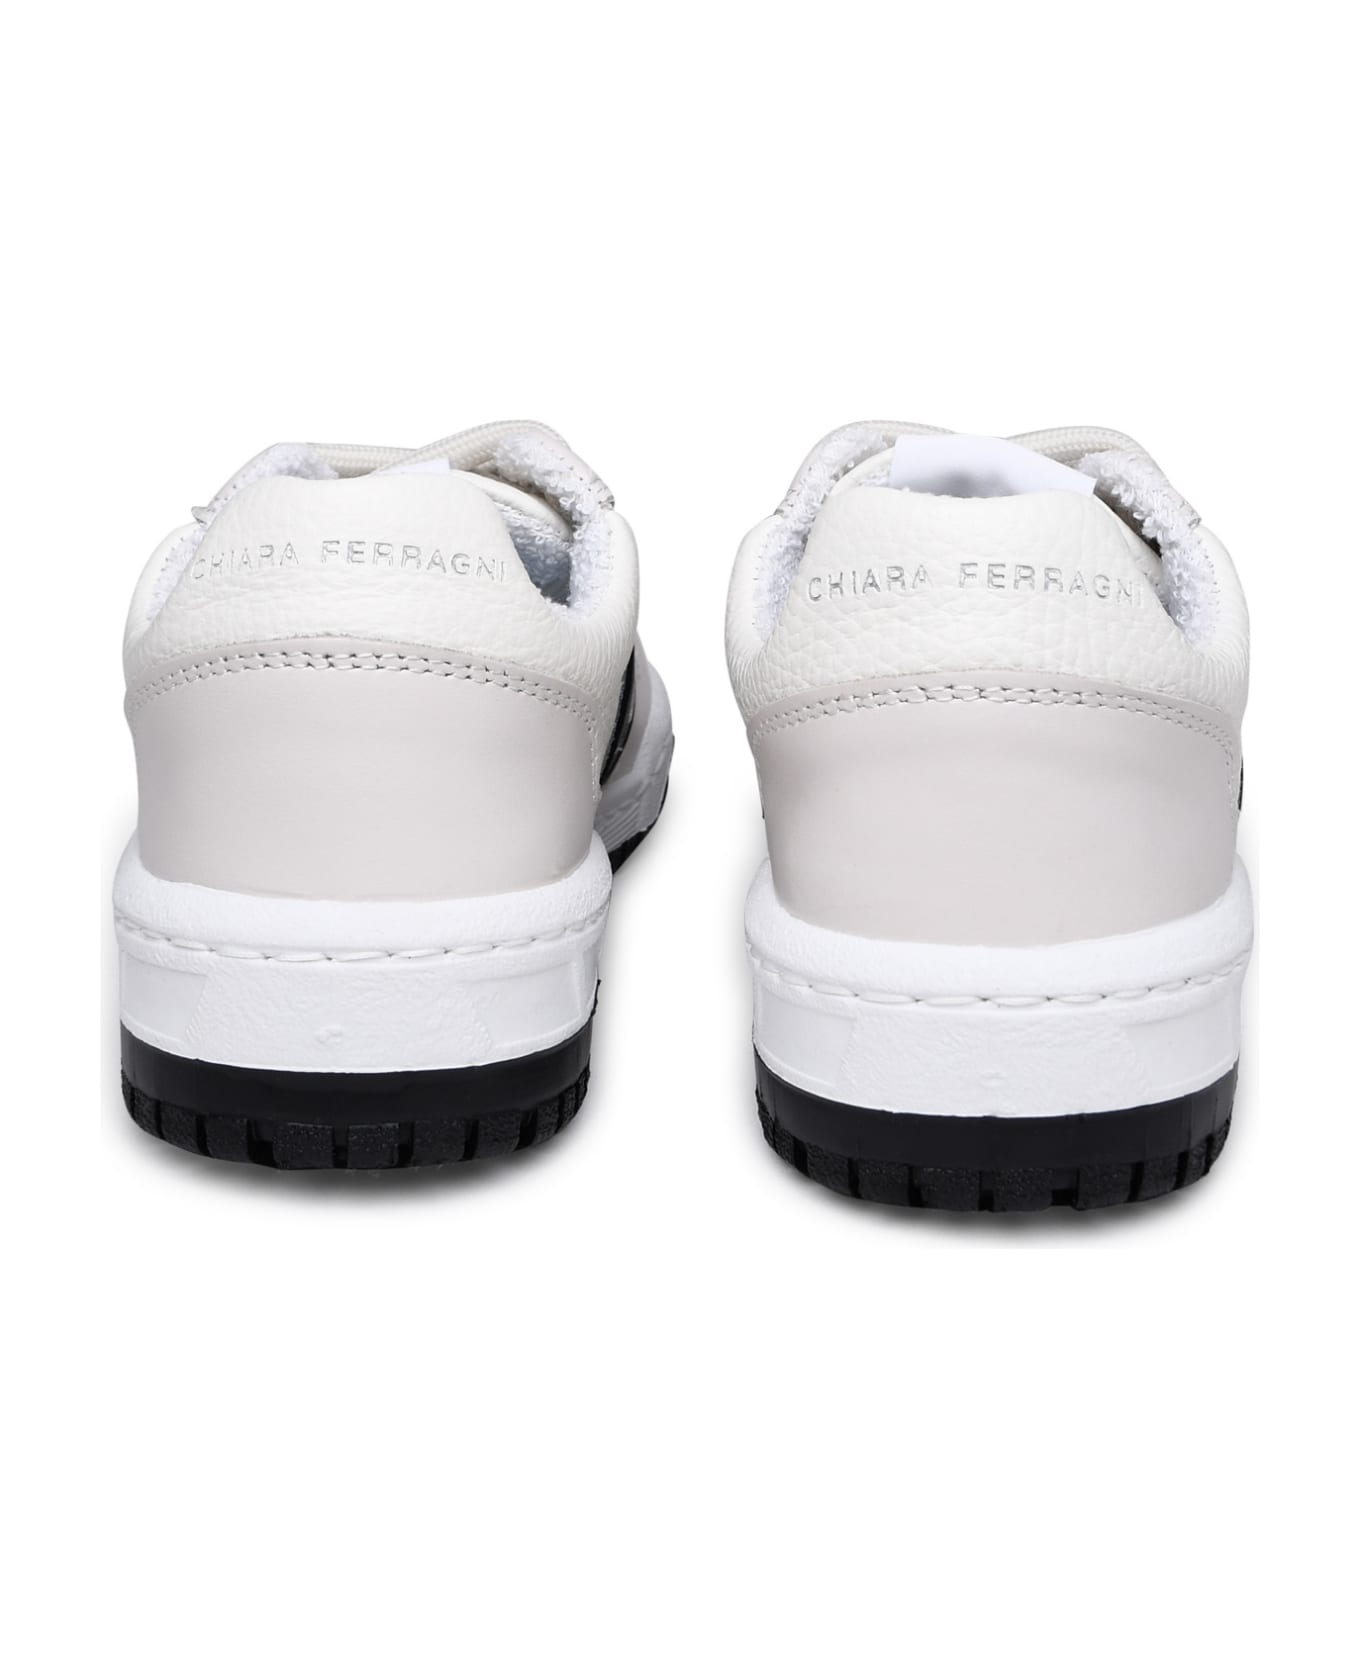 Chiara Ferragni Cf1 White Leather Sneakers - White スニーカー